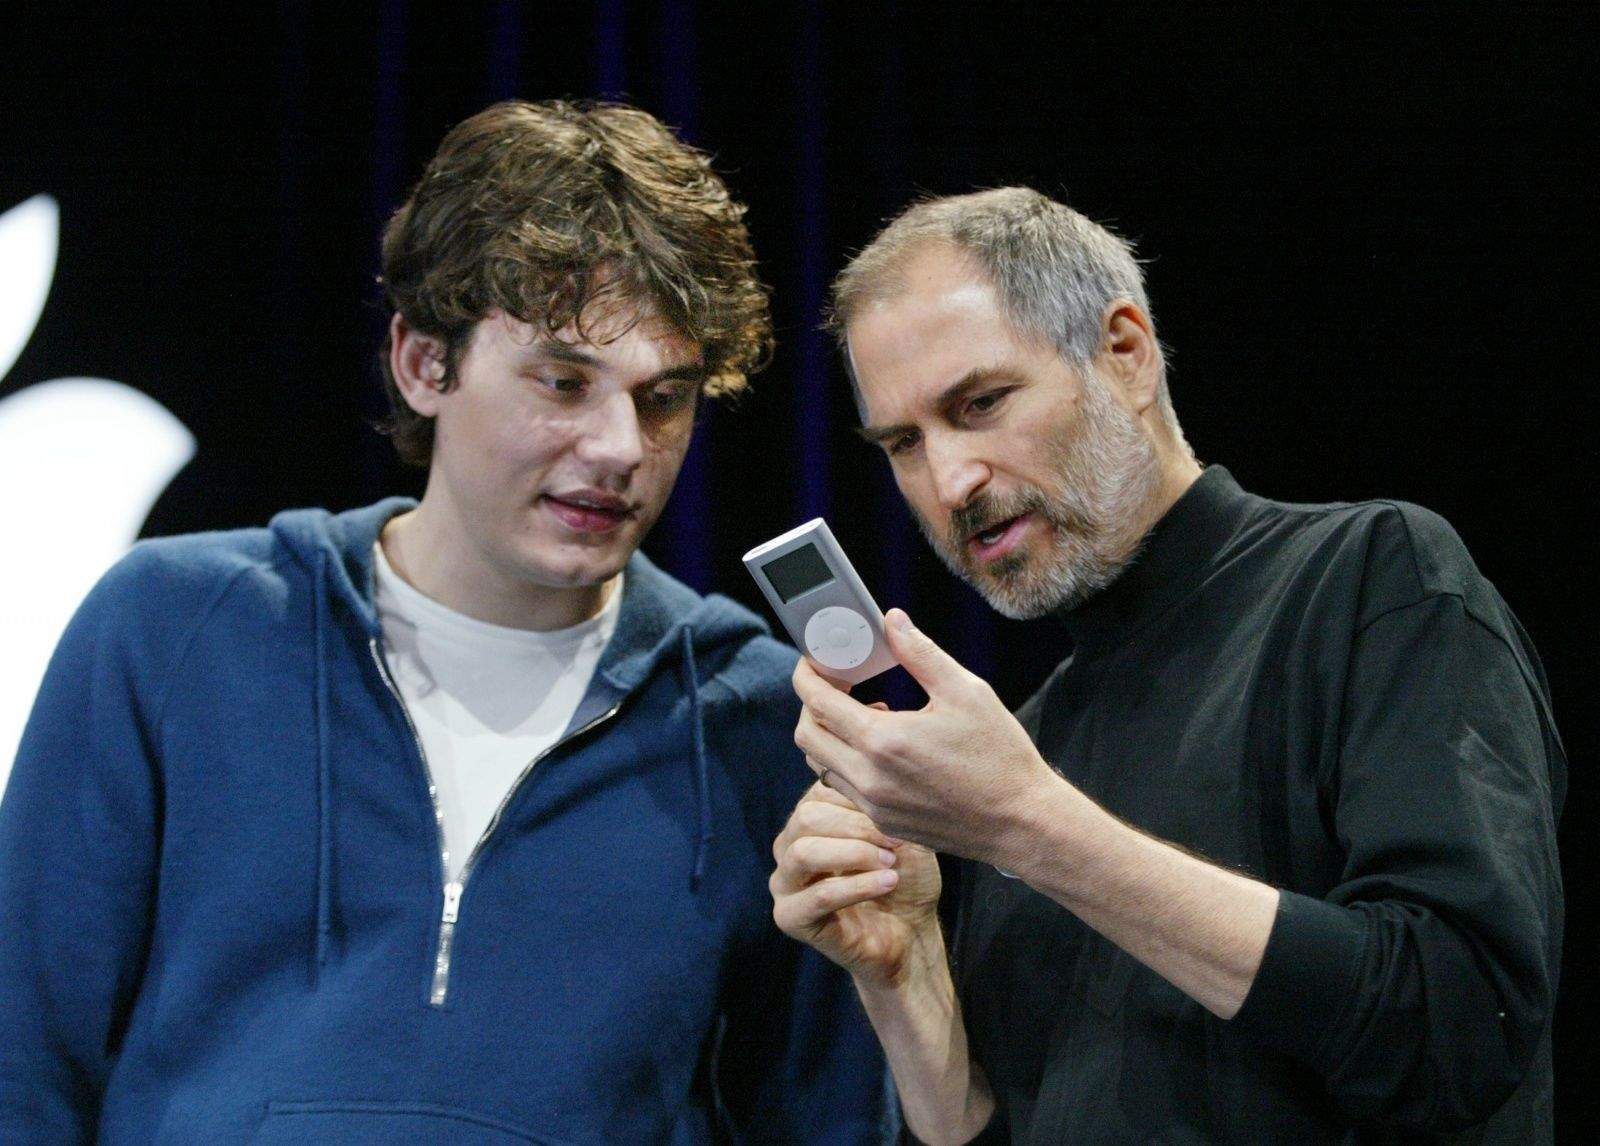 John Mayer and Steve Jobs at the iPod Mini unveiling. Photo: Apple